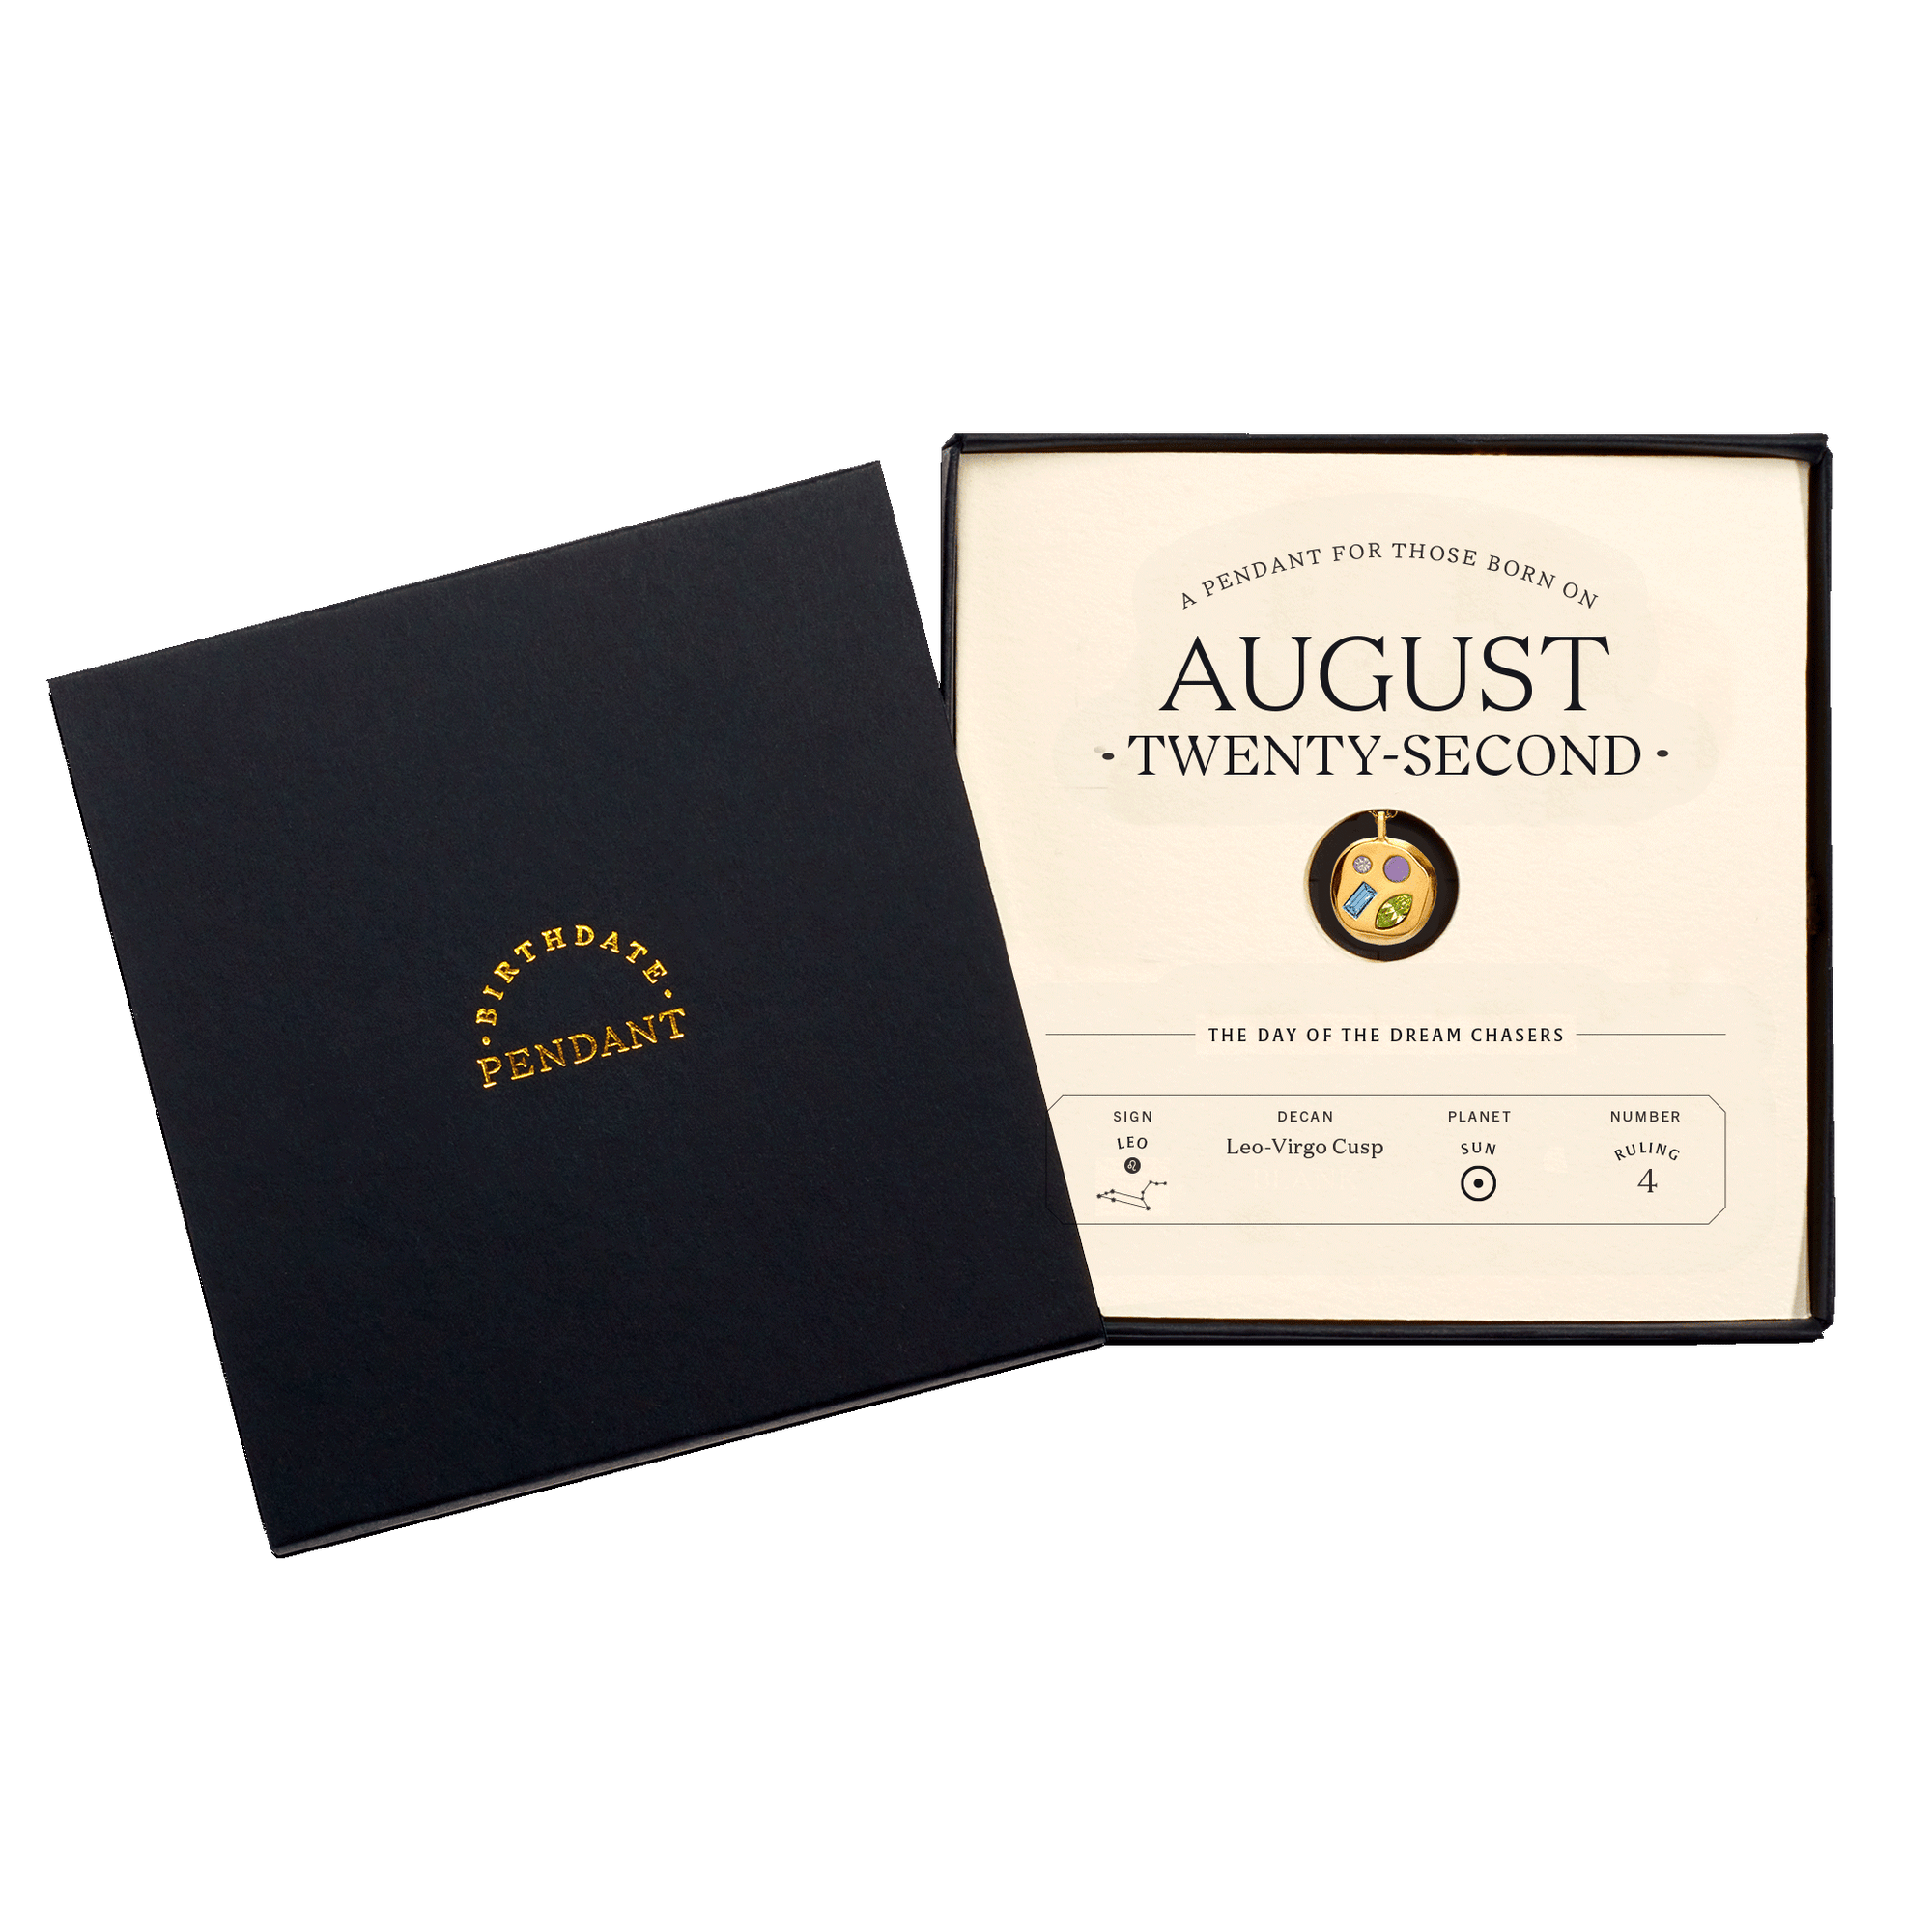 The August Twenty-Second Pendant inside its box